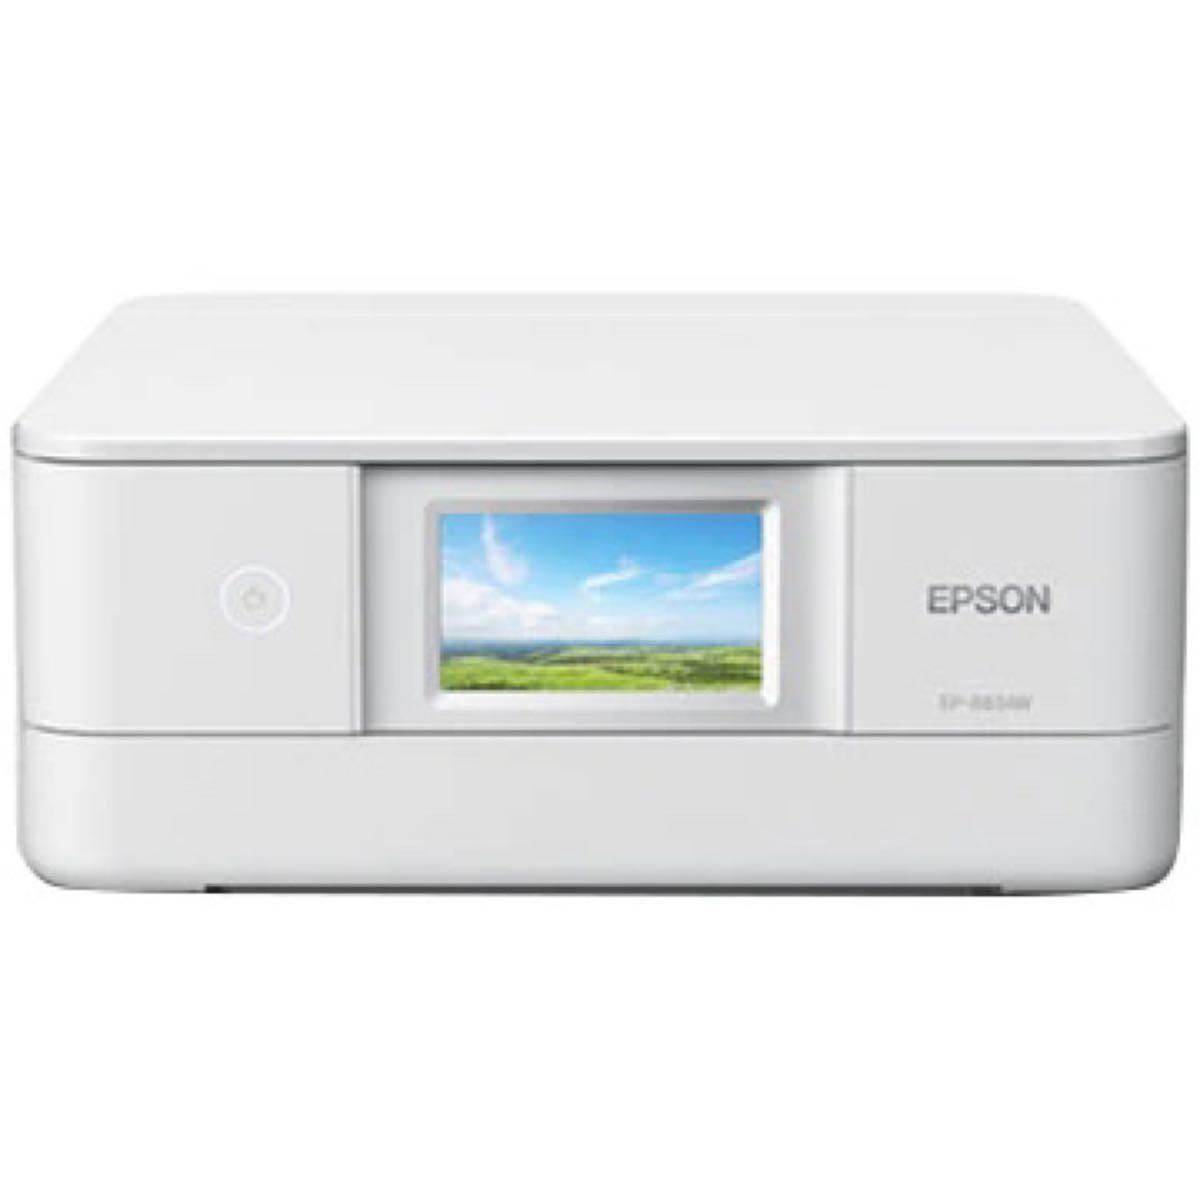 EPSON Colorio ホワイト EP-883AW 新品メーカー1年保証